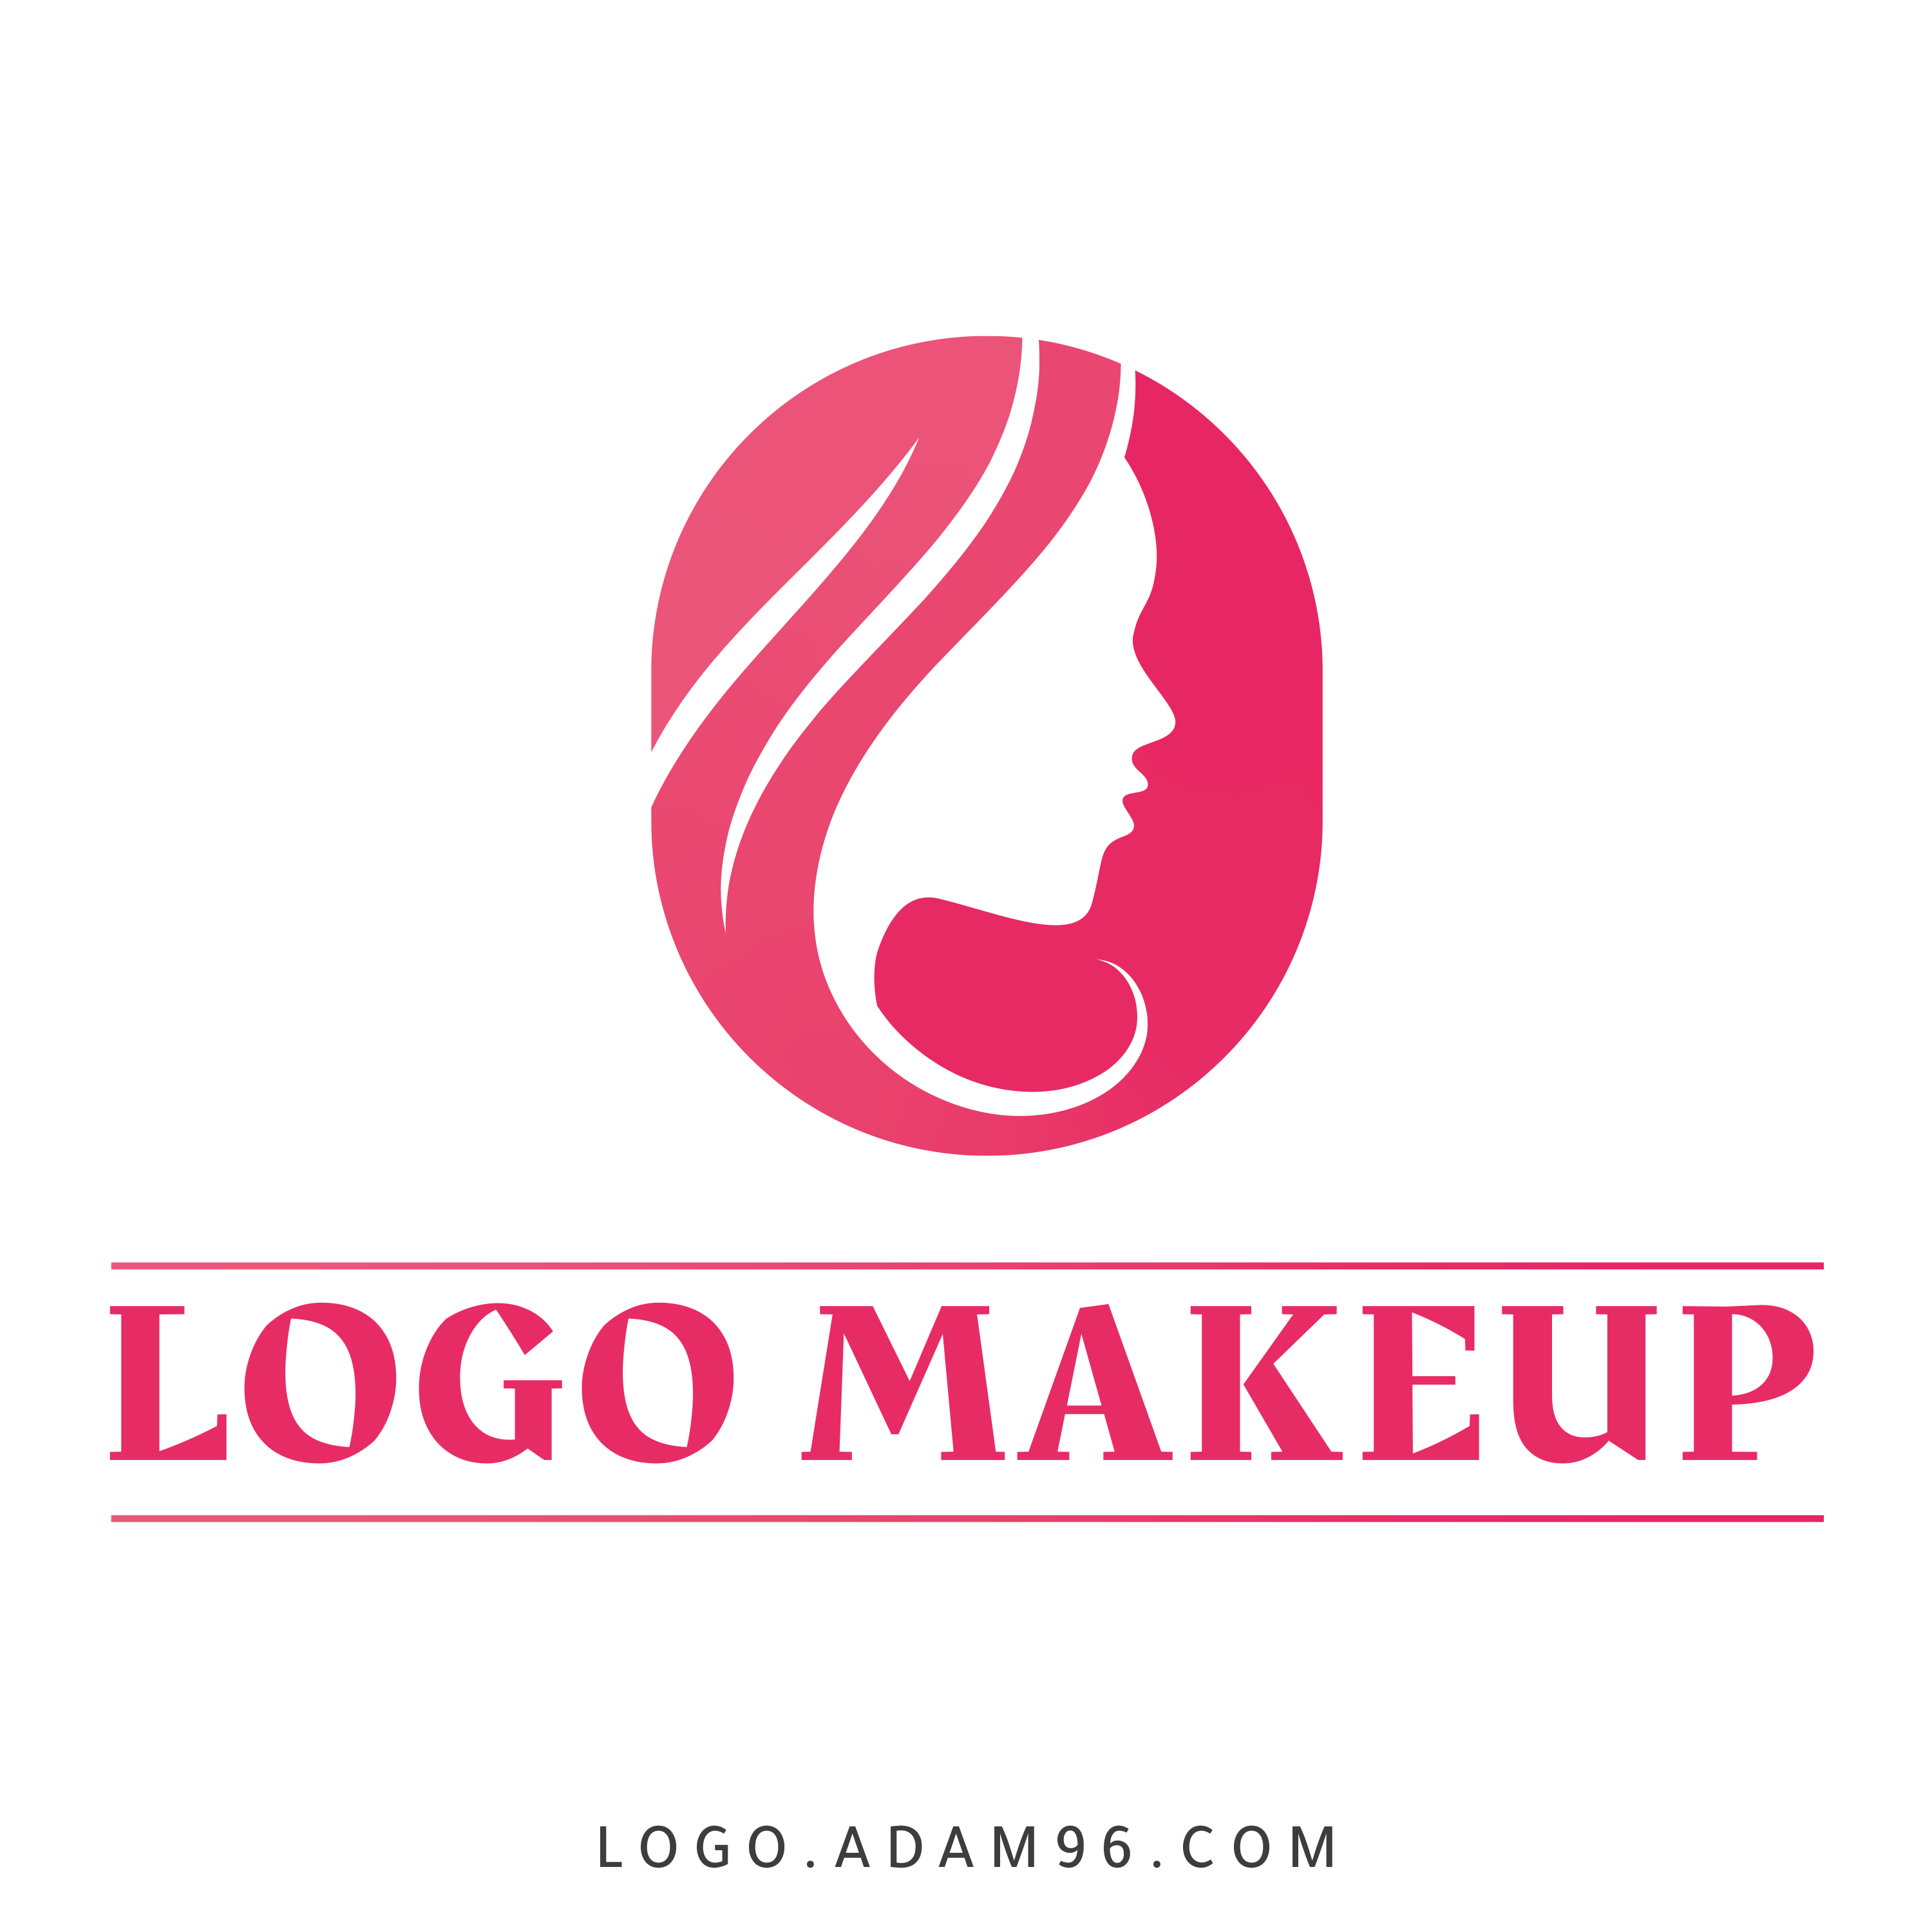 تحميل شعار ميك اب بلا حقوق مجاناً Logo Makeup SVG - PNG